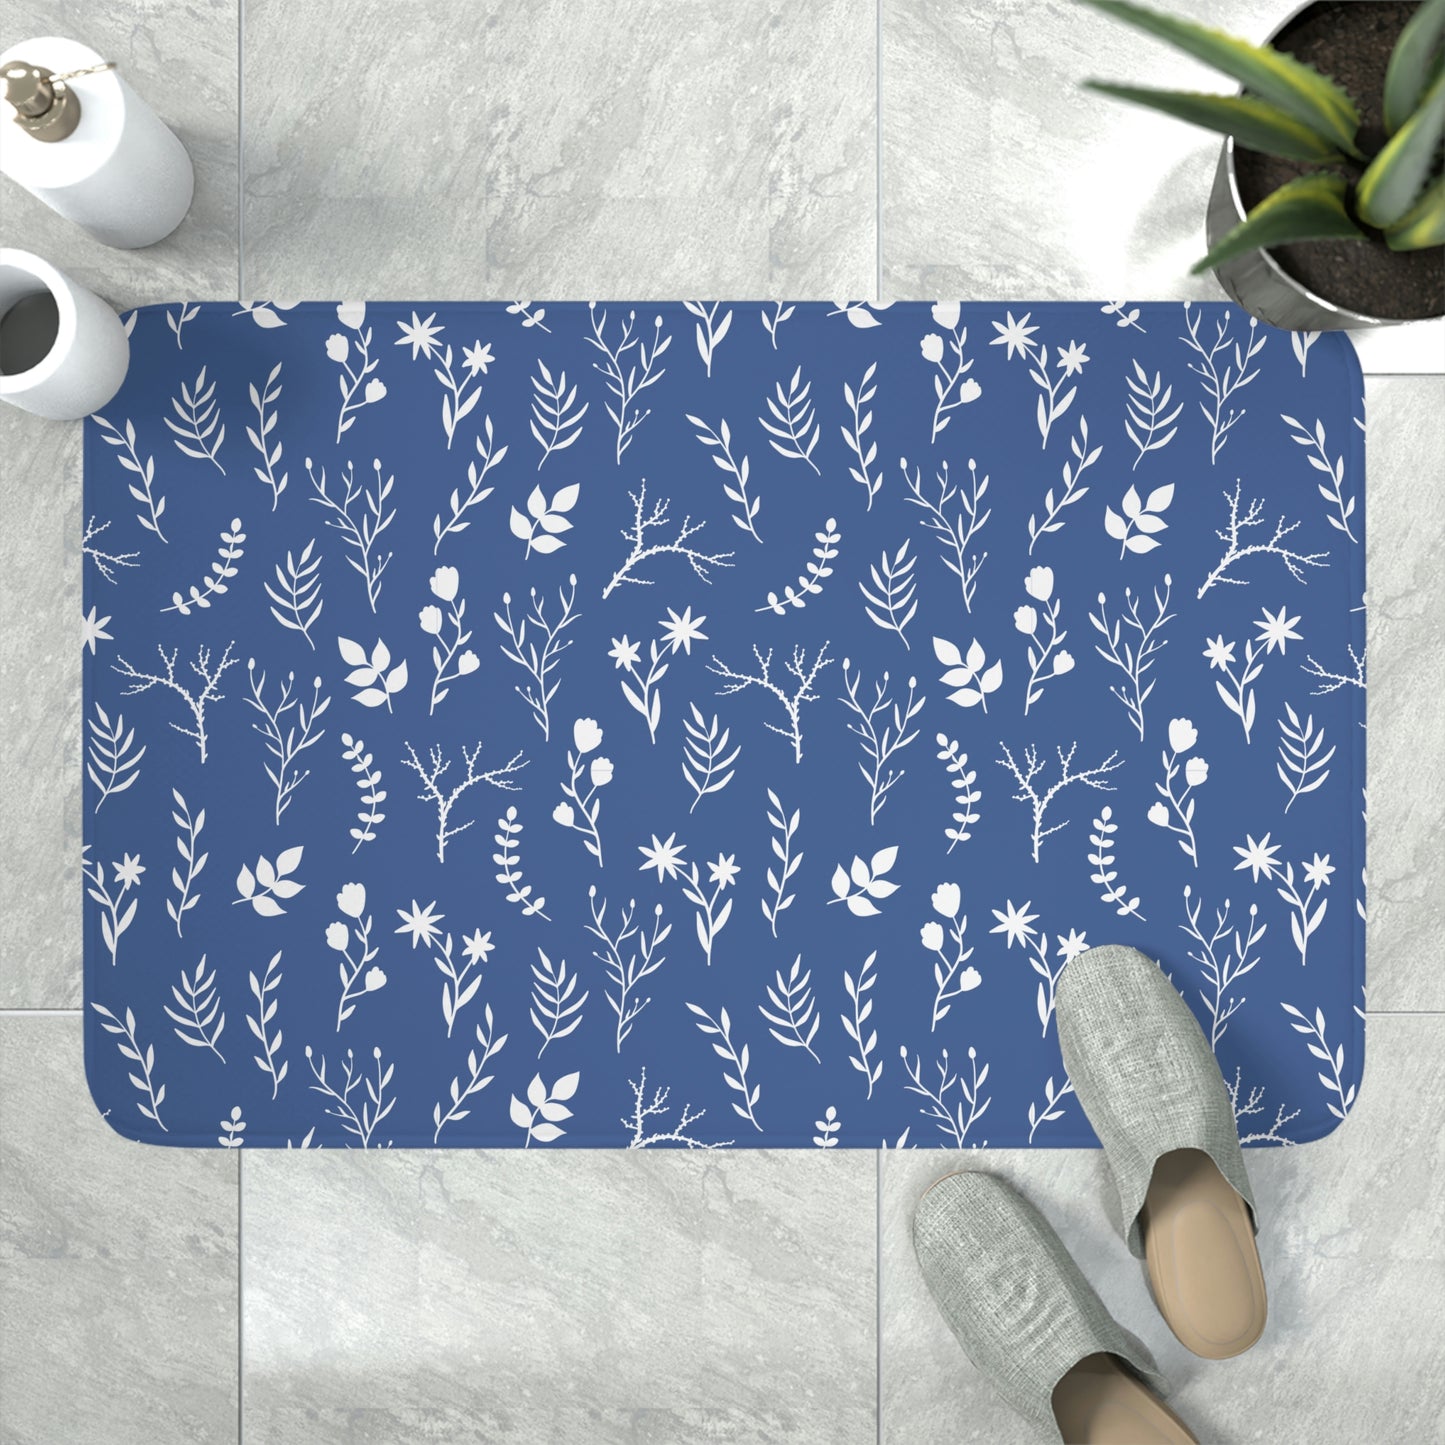 Indigo Blue and White Floral Print Bathmat | Blue Bathroom Bathmat